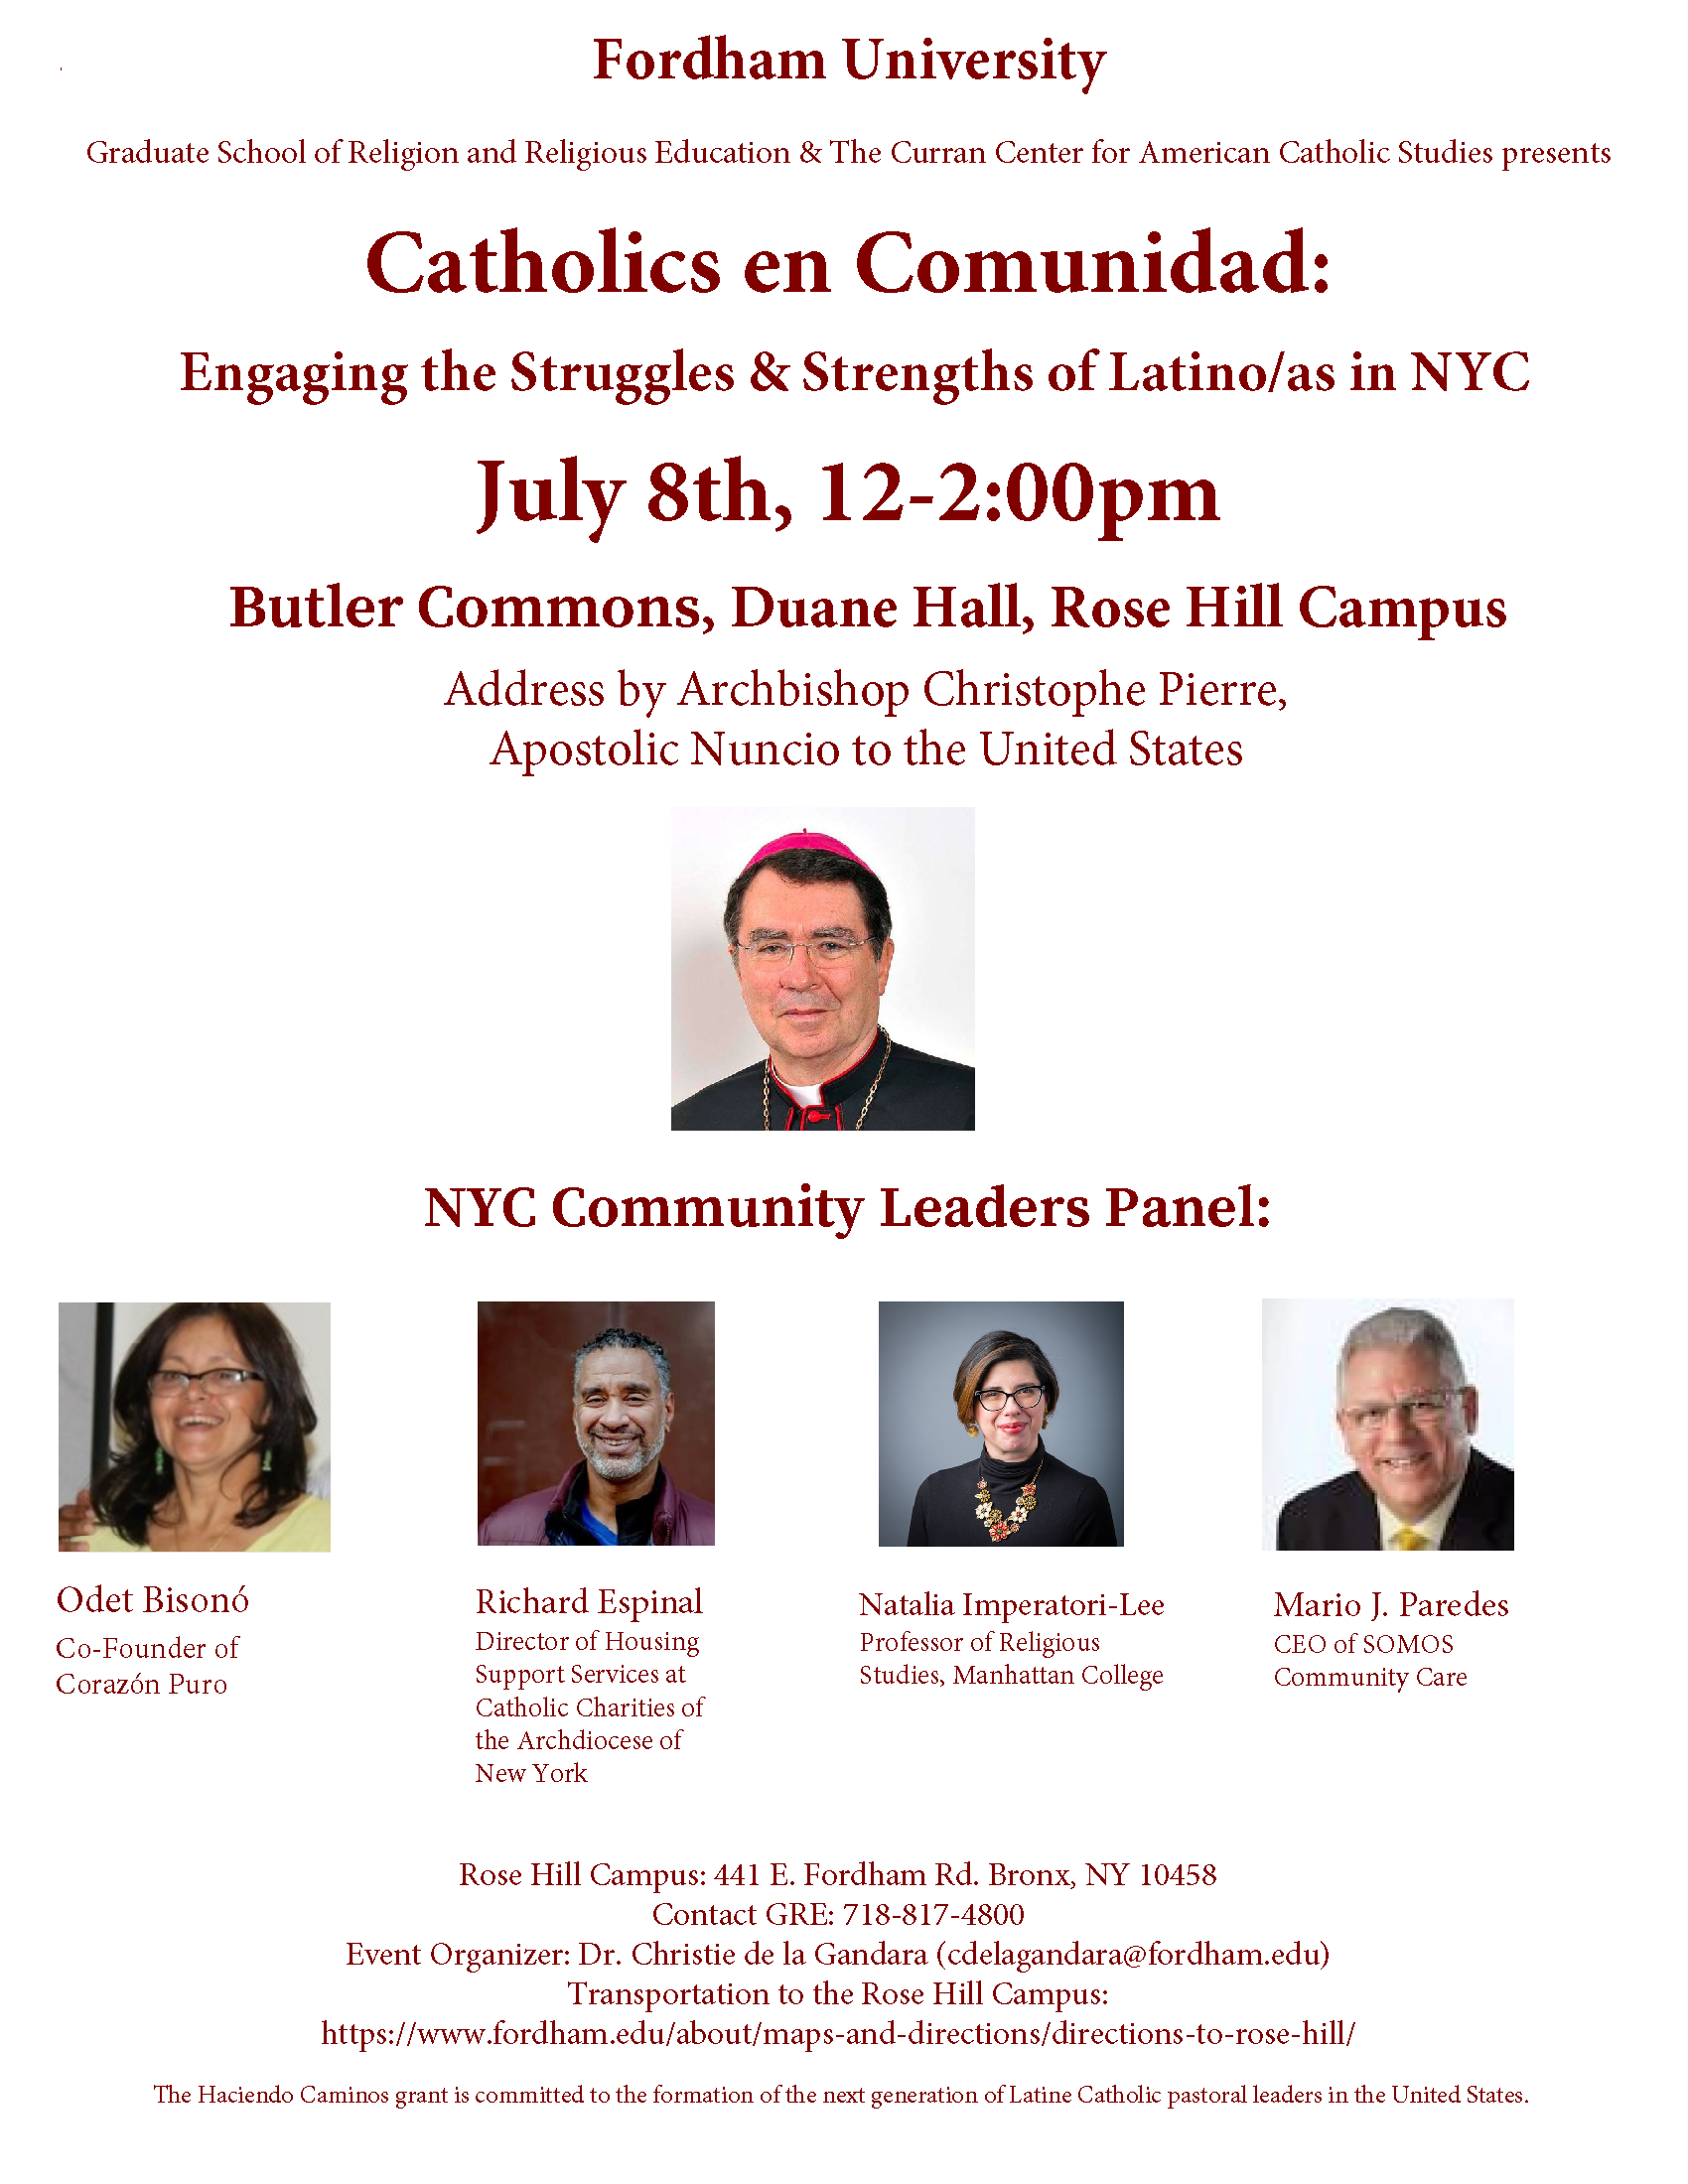 July 8th conference on Catholics en Comunidad